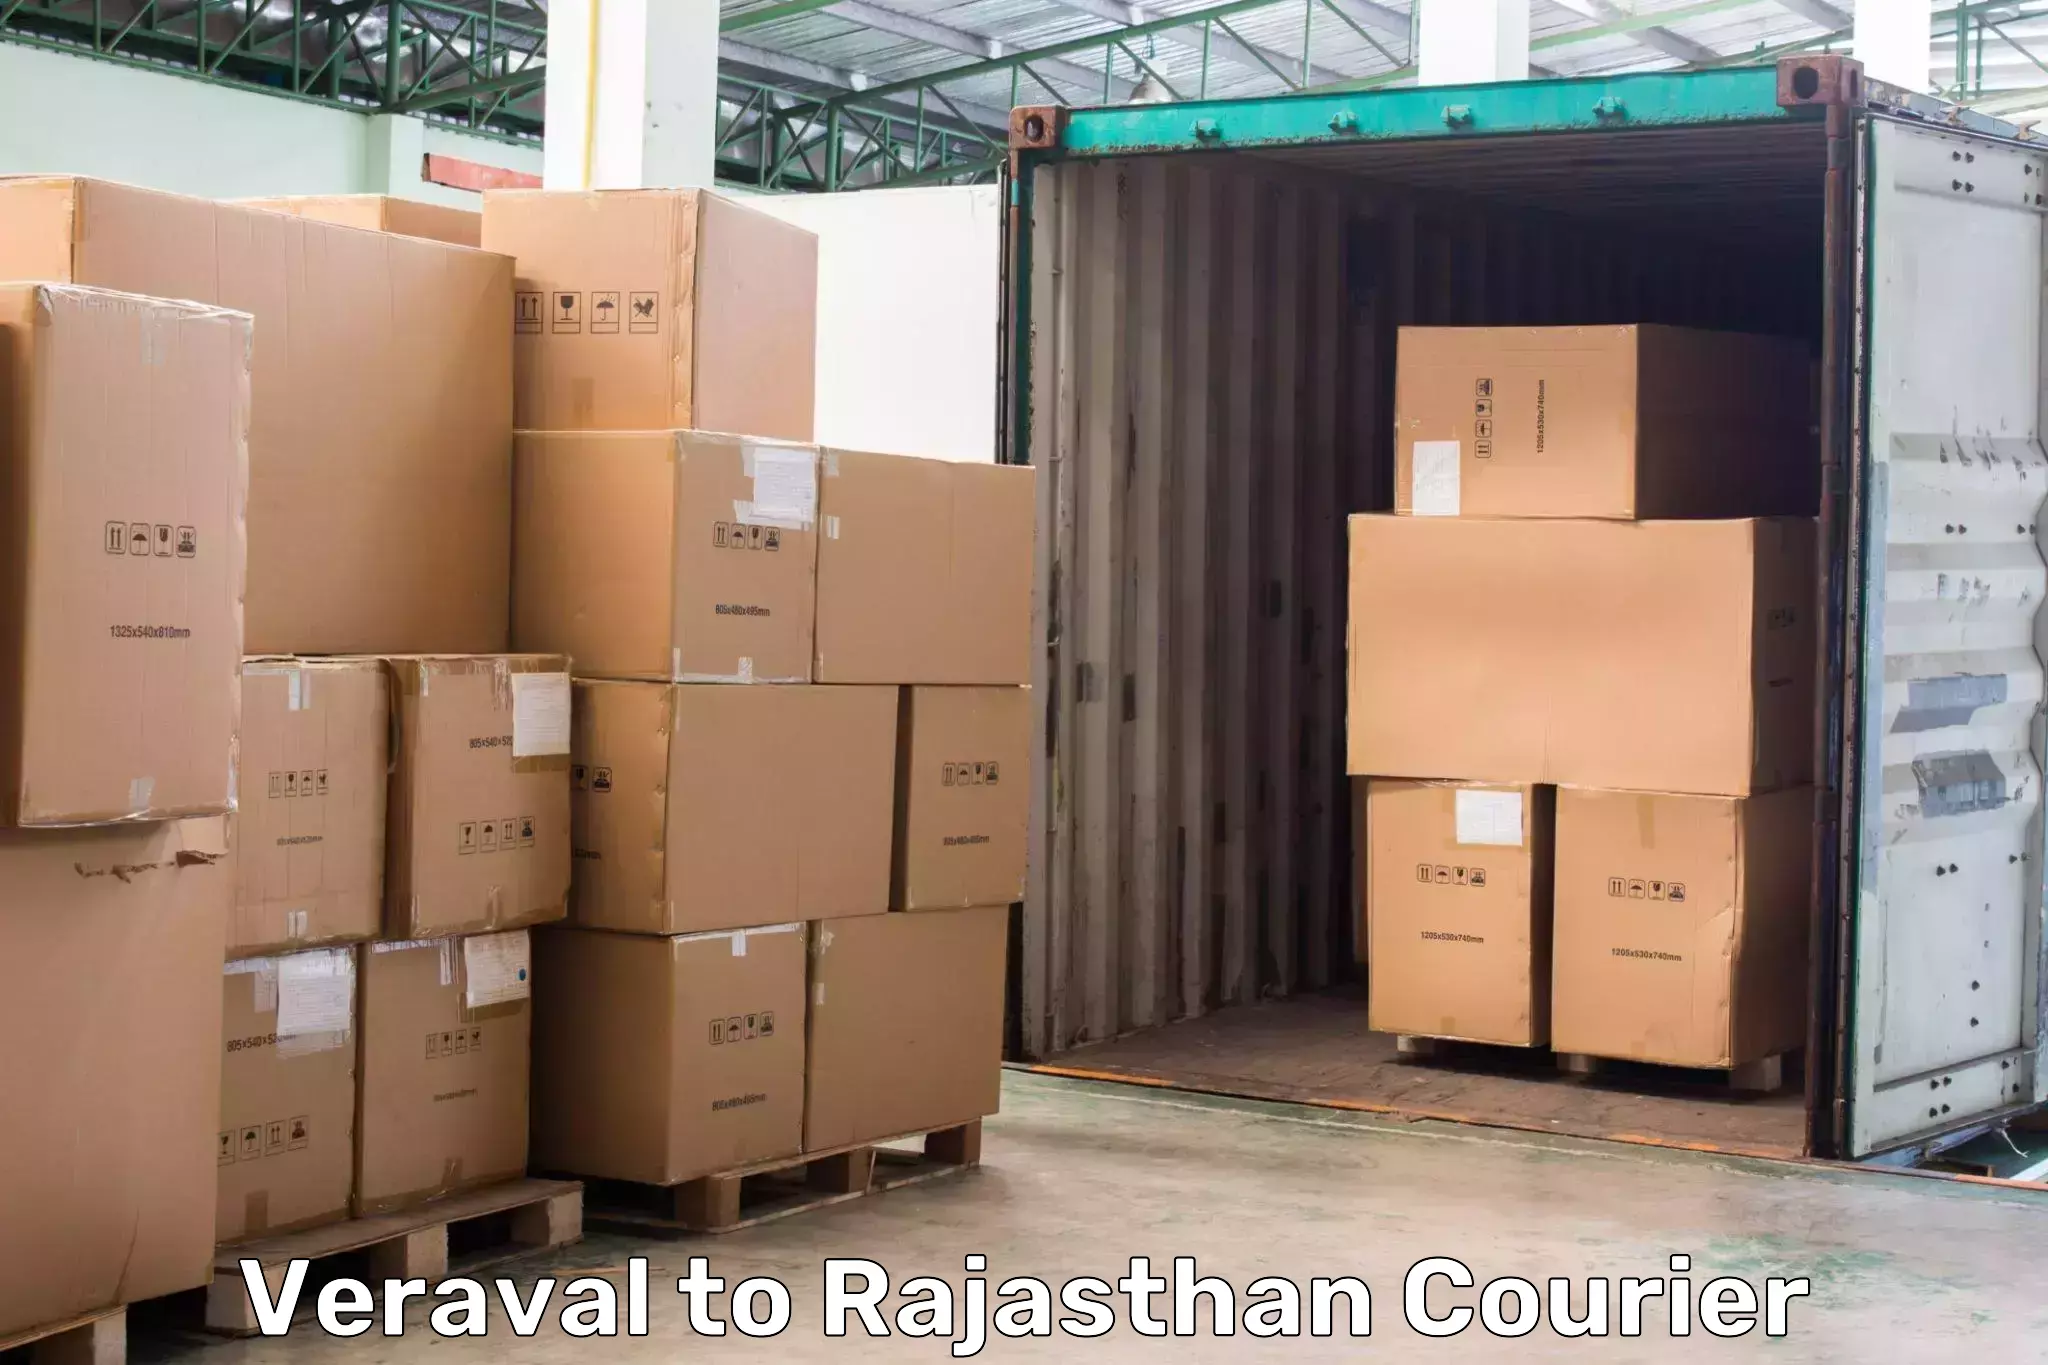 Digital courier platforms Veraval to Raipur Pali